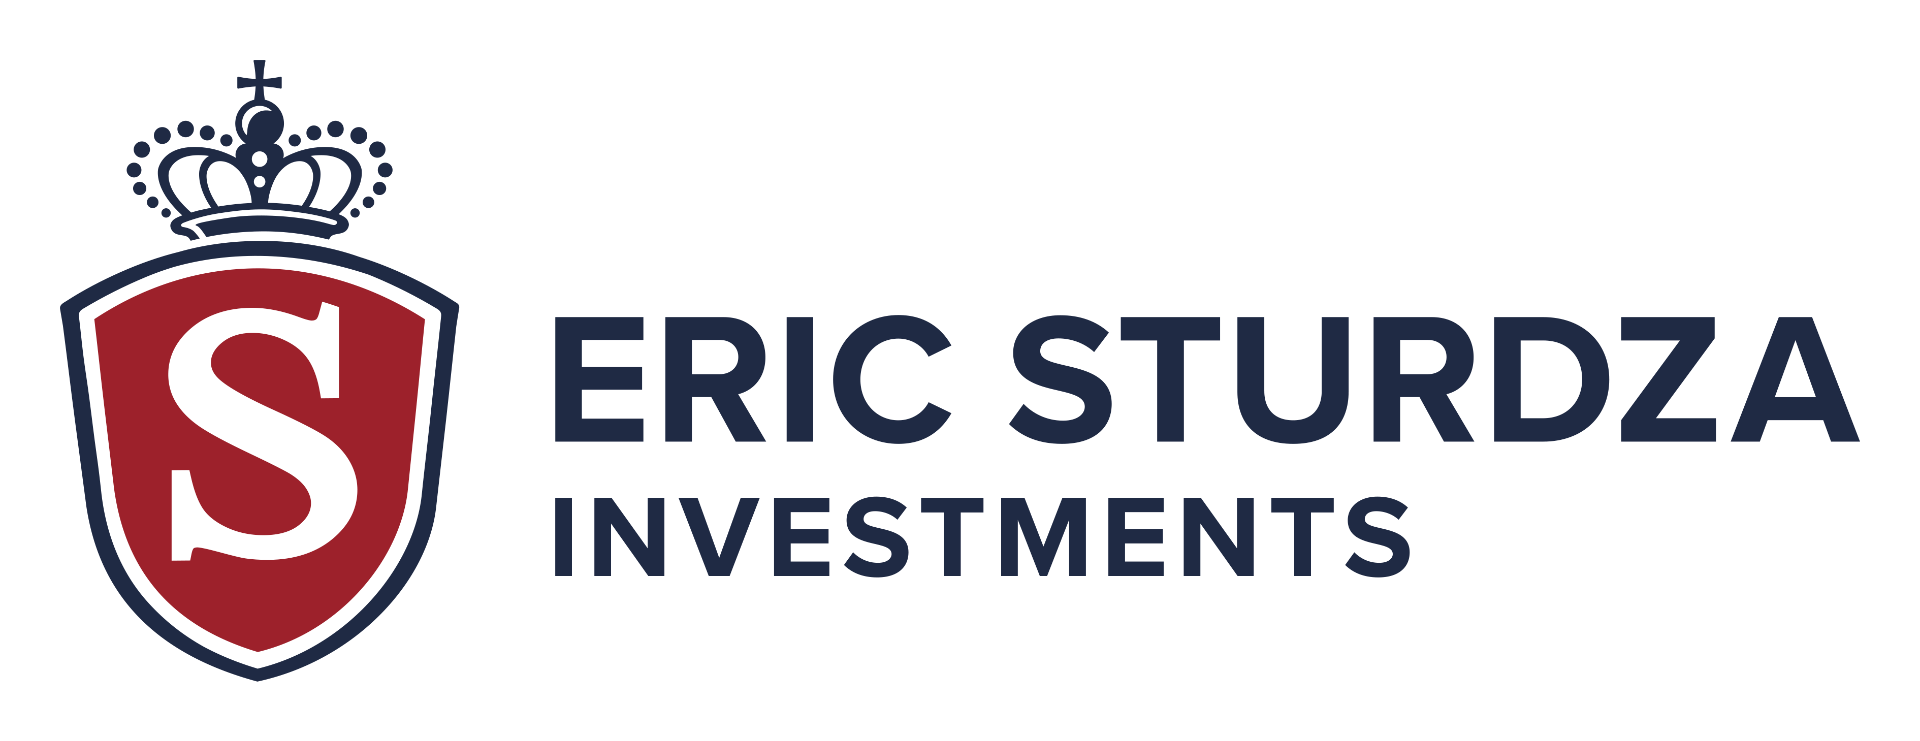 Eric Sturdza Investments logo